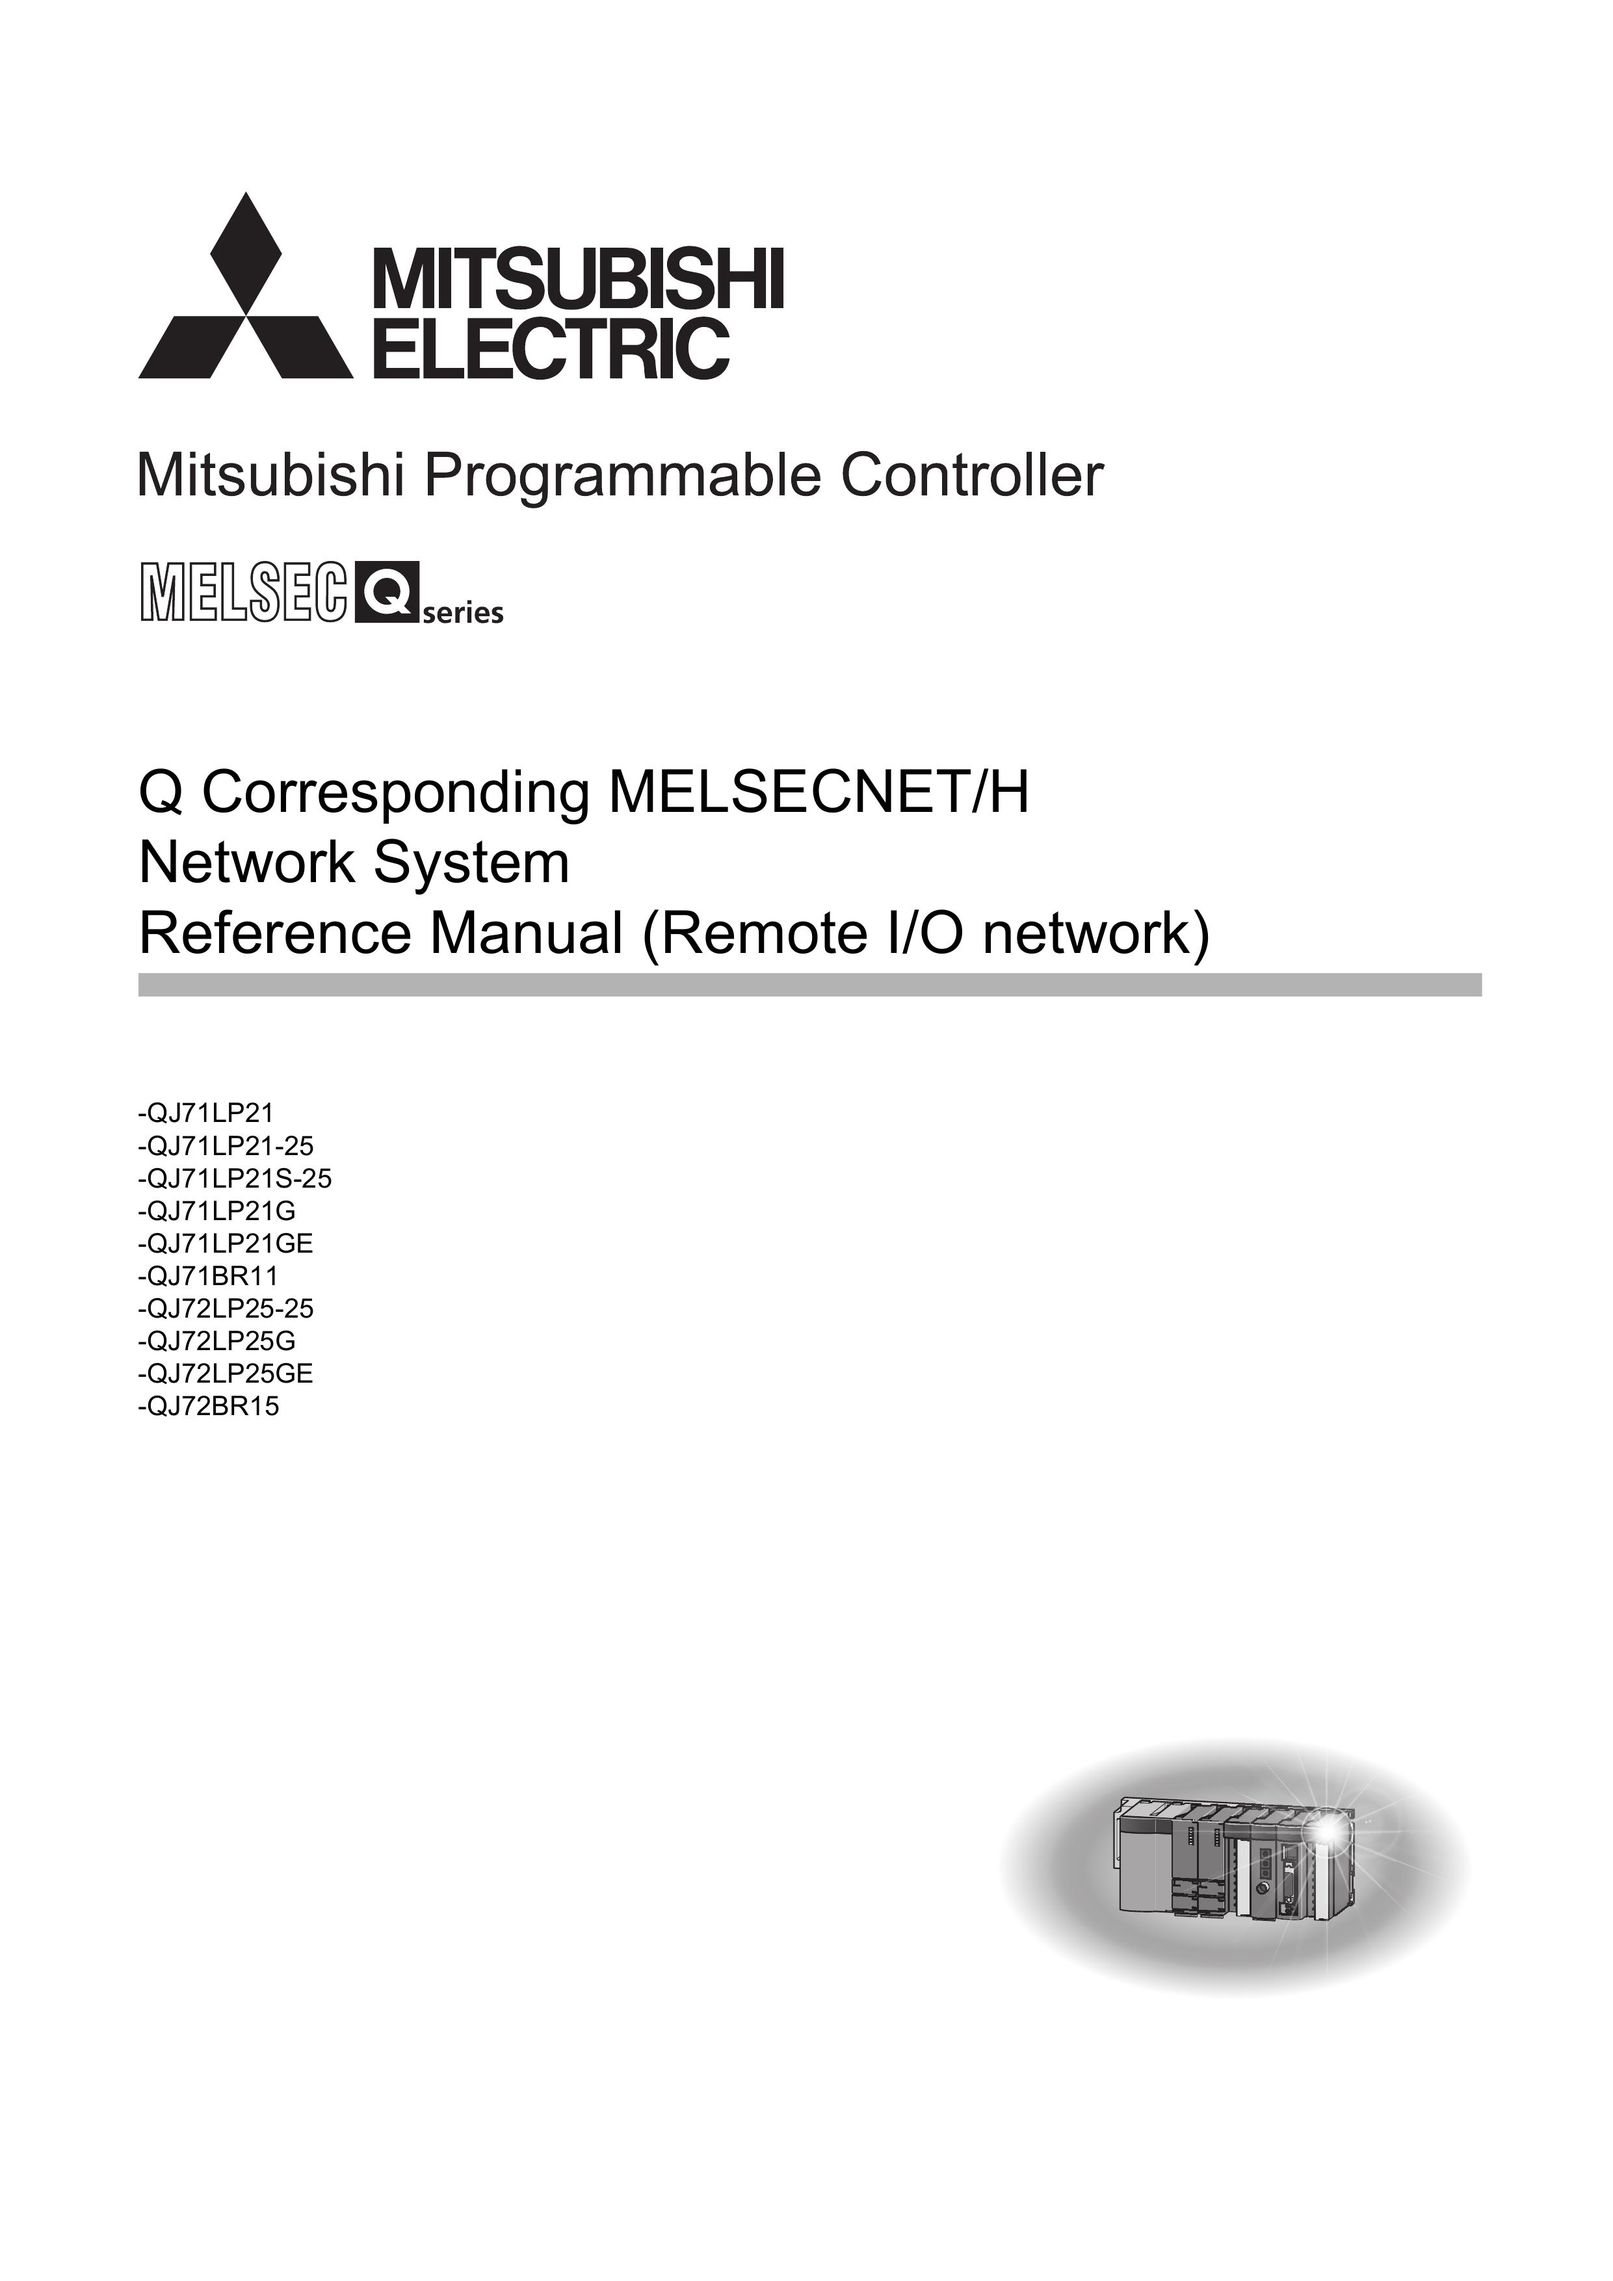 Mitsubishi Electronics QJ71LP21-25 Universal Remote User Manual